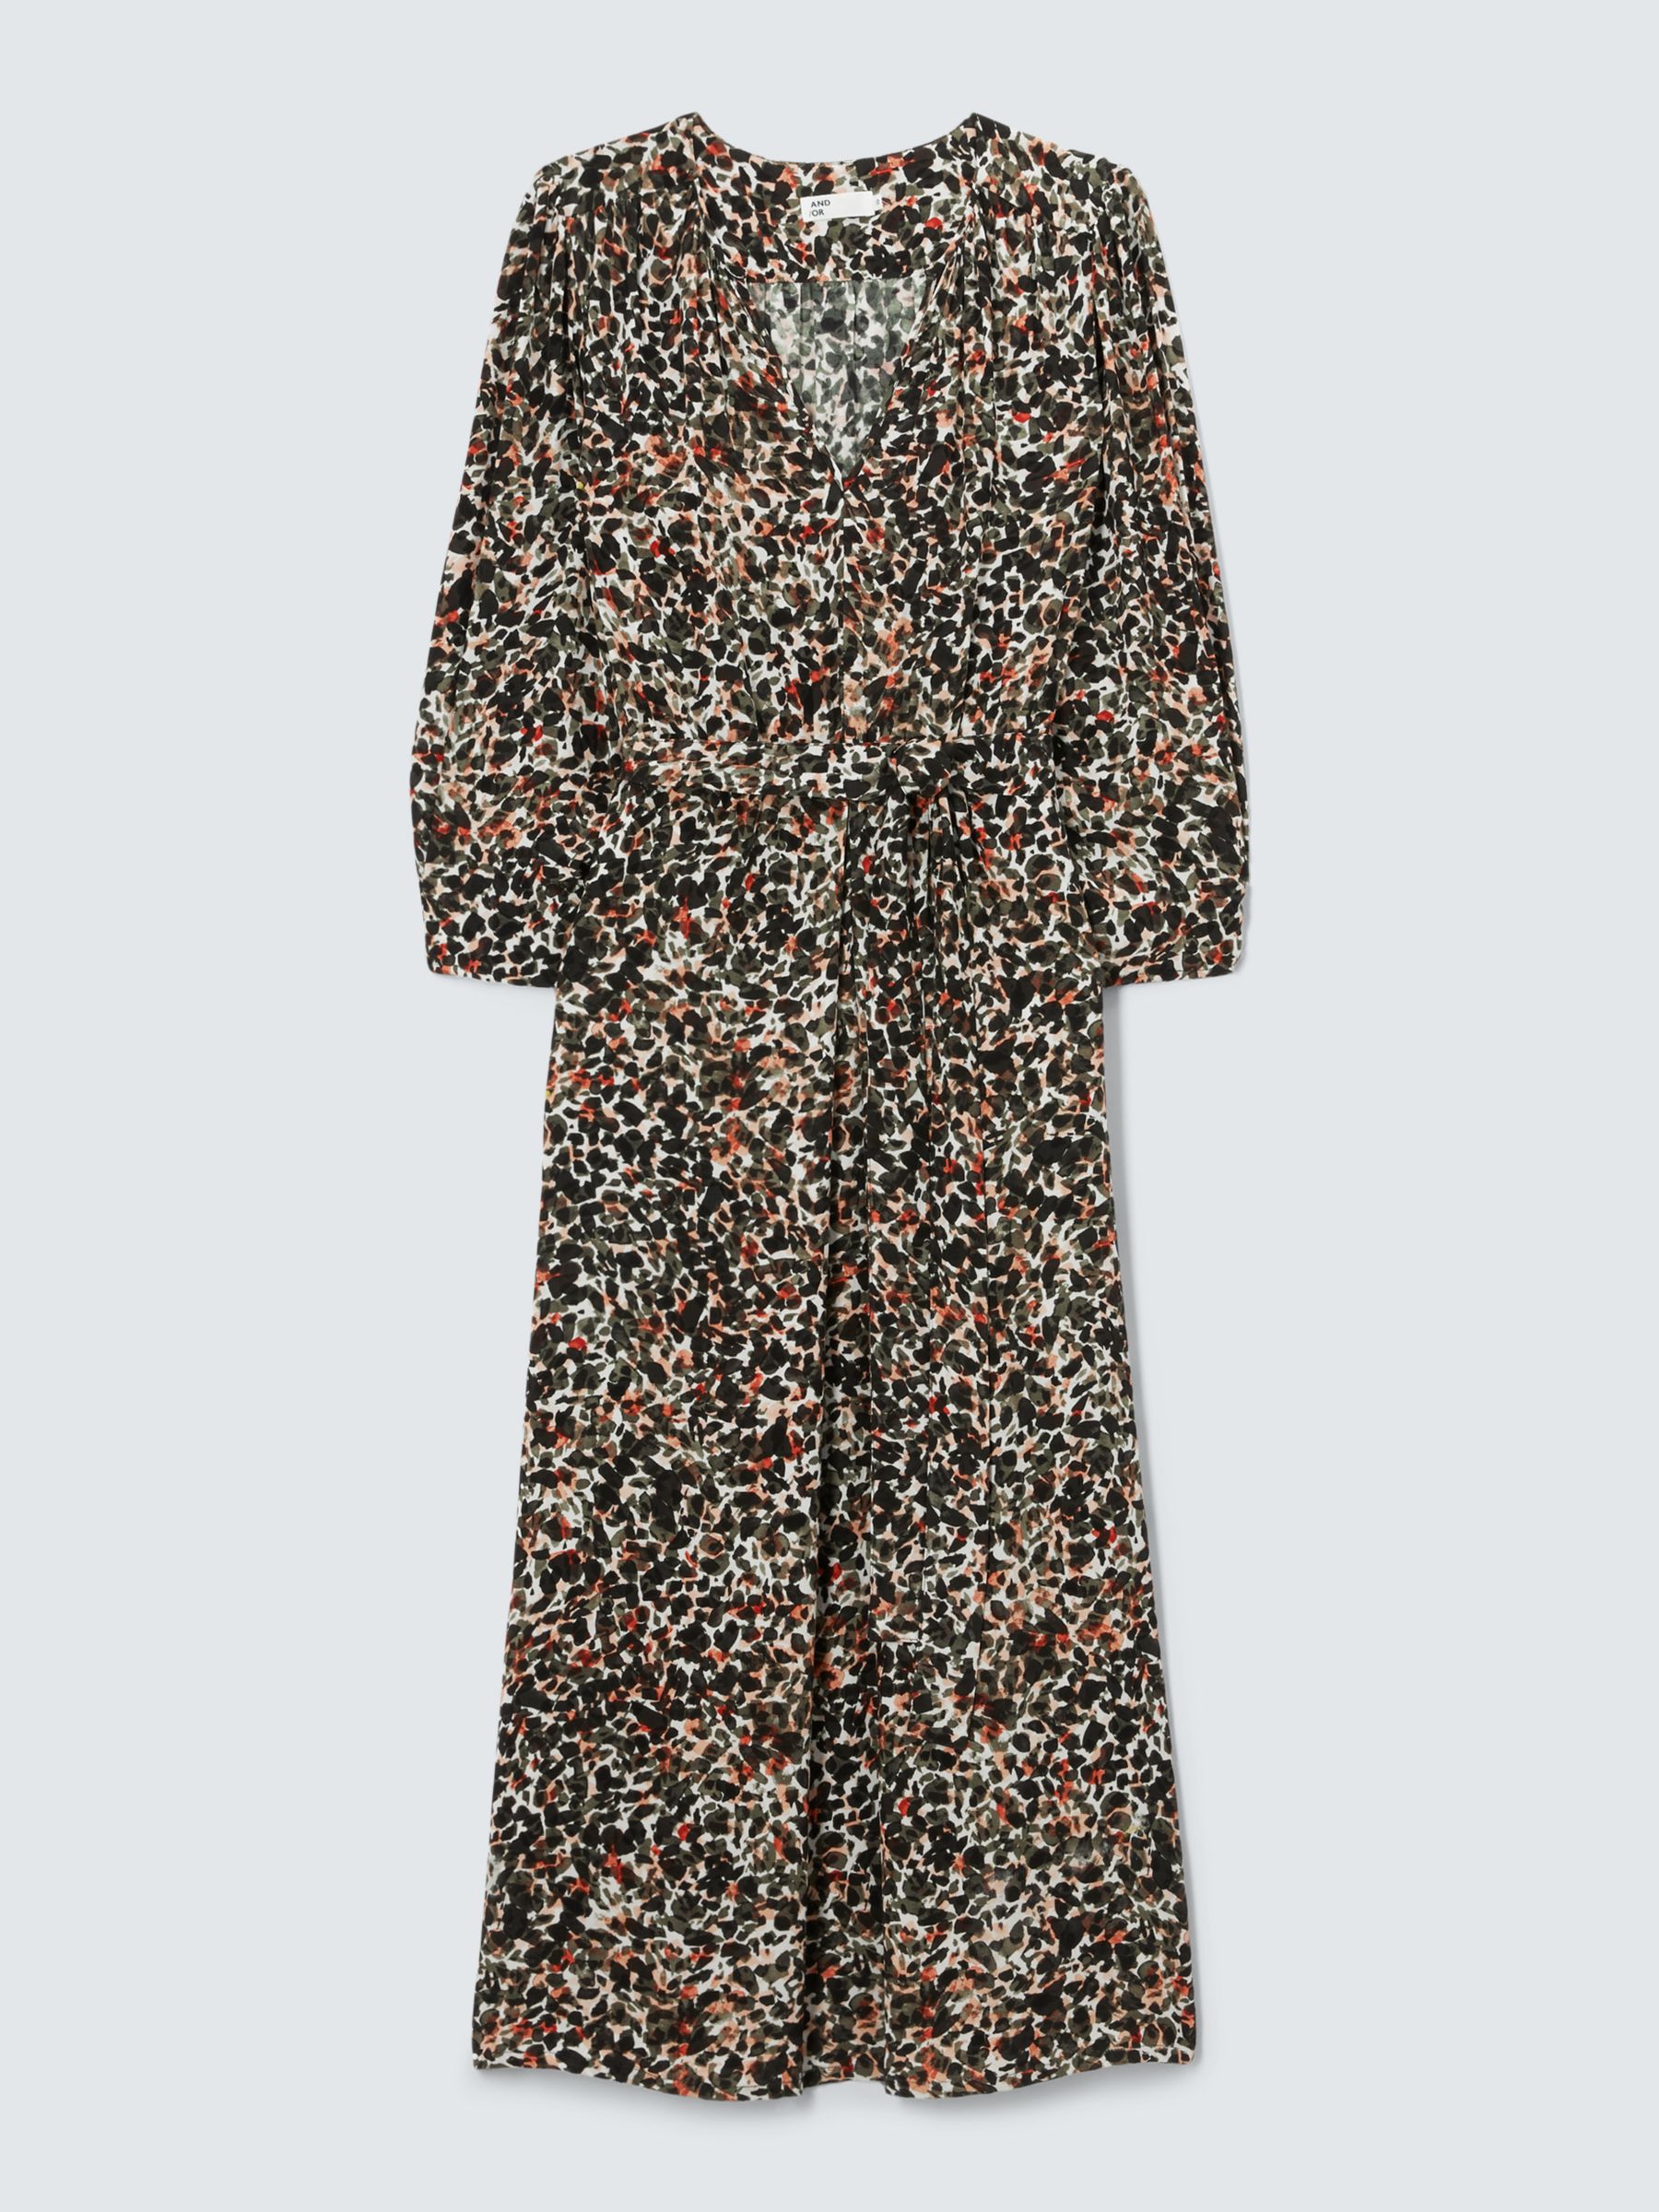 AND/OR Beth Mosaic Midi Dress, Multi, 6